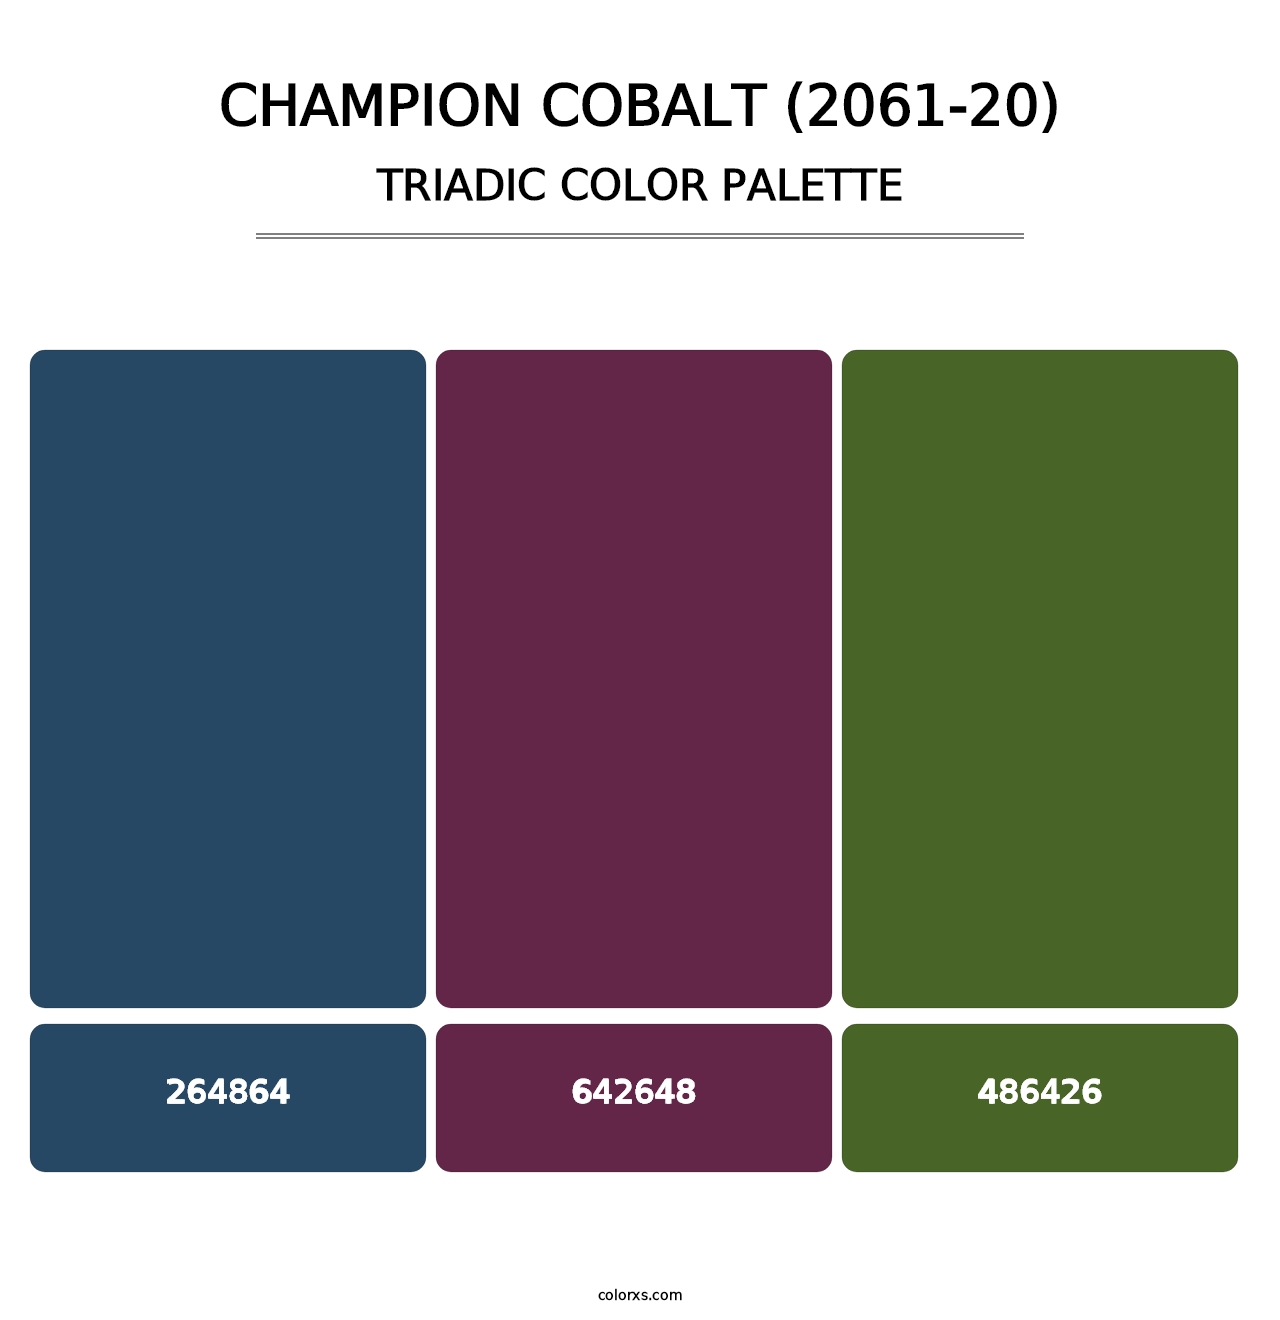 Champion Cobalt (2061-20) - Triadic Color Palette